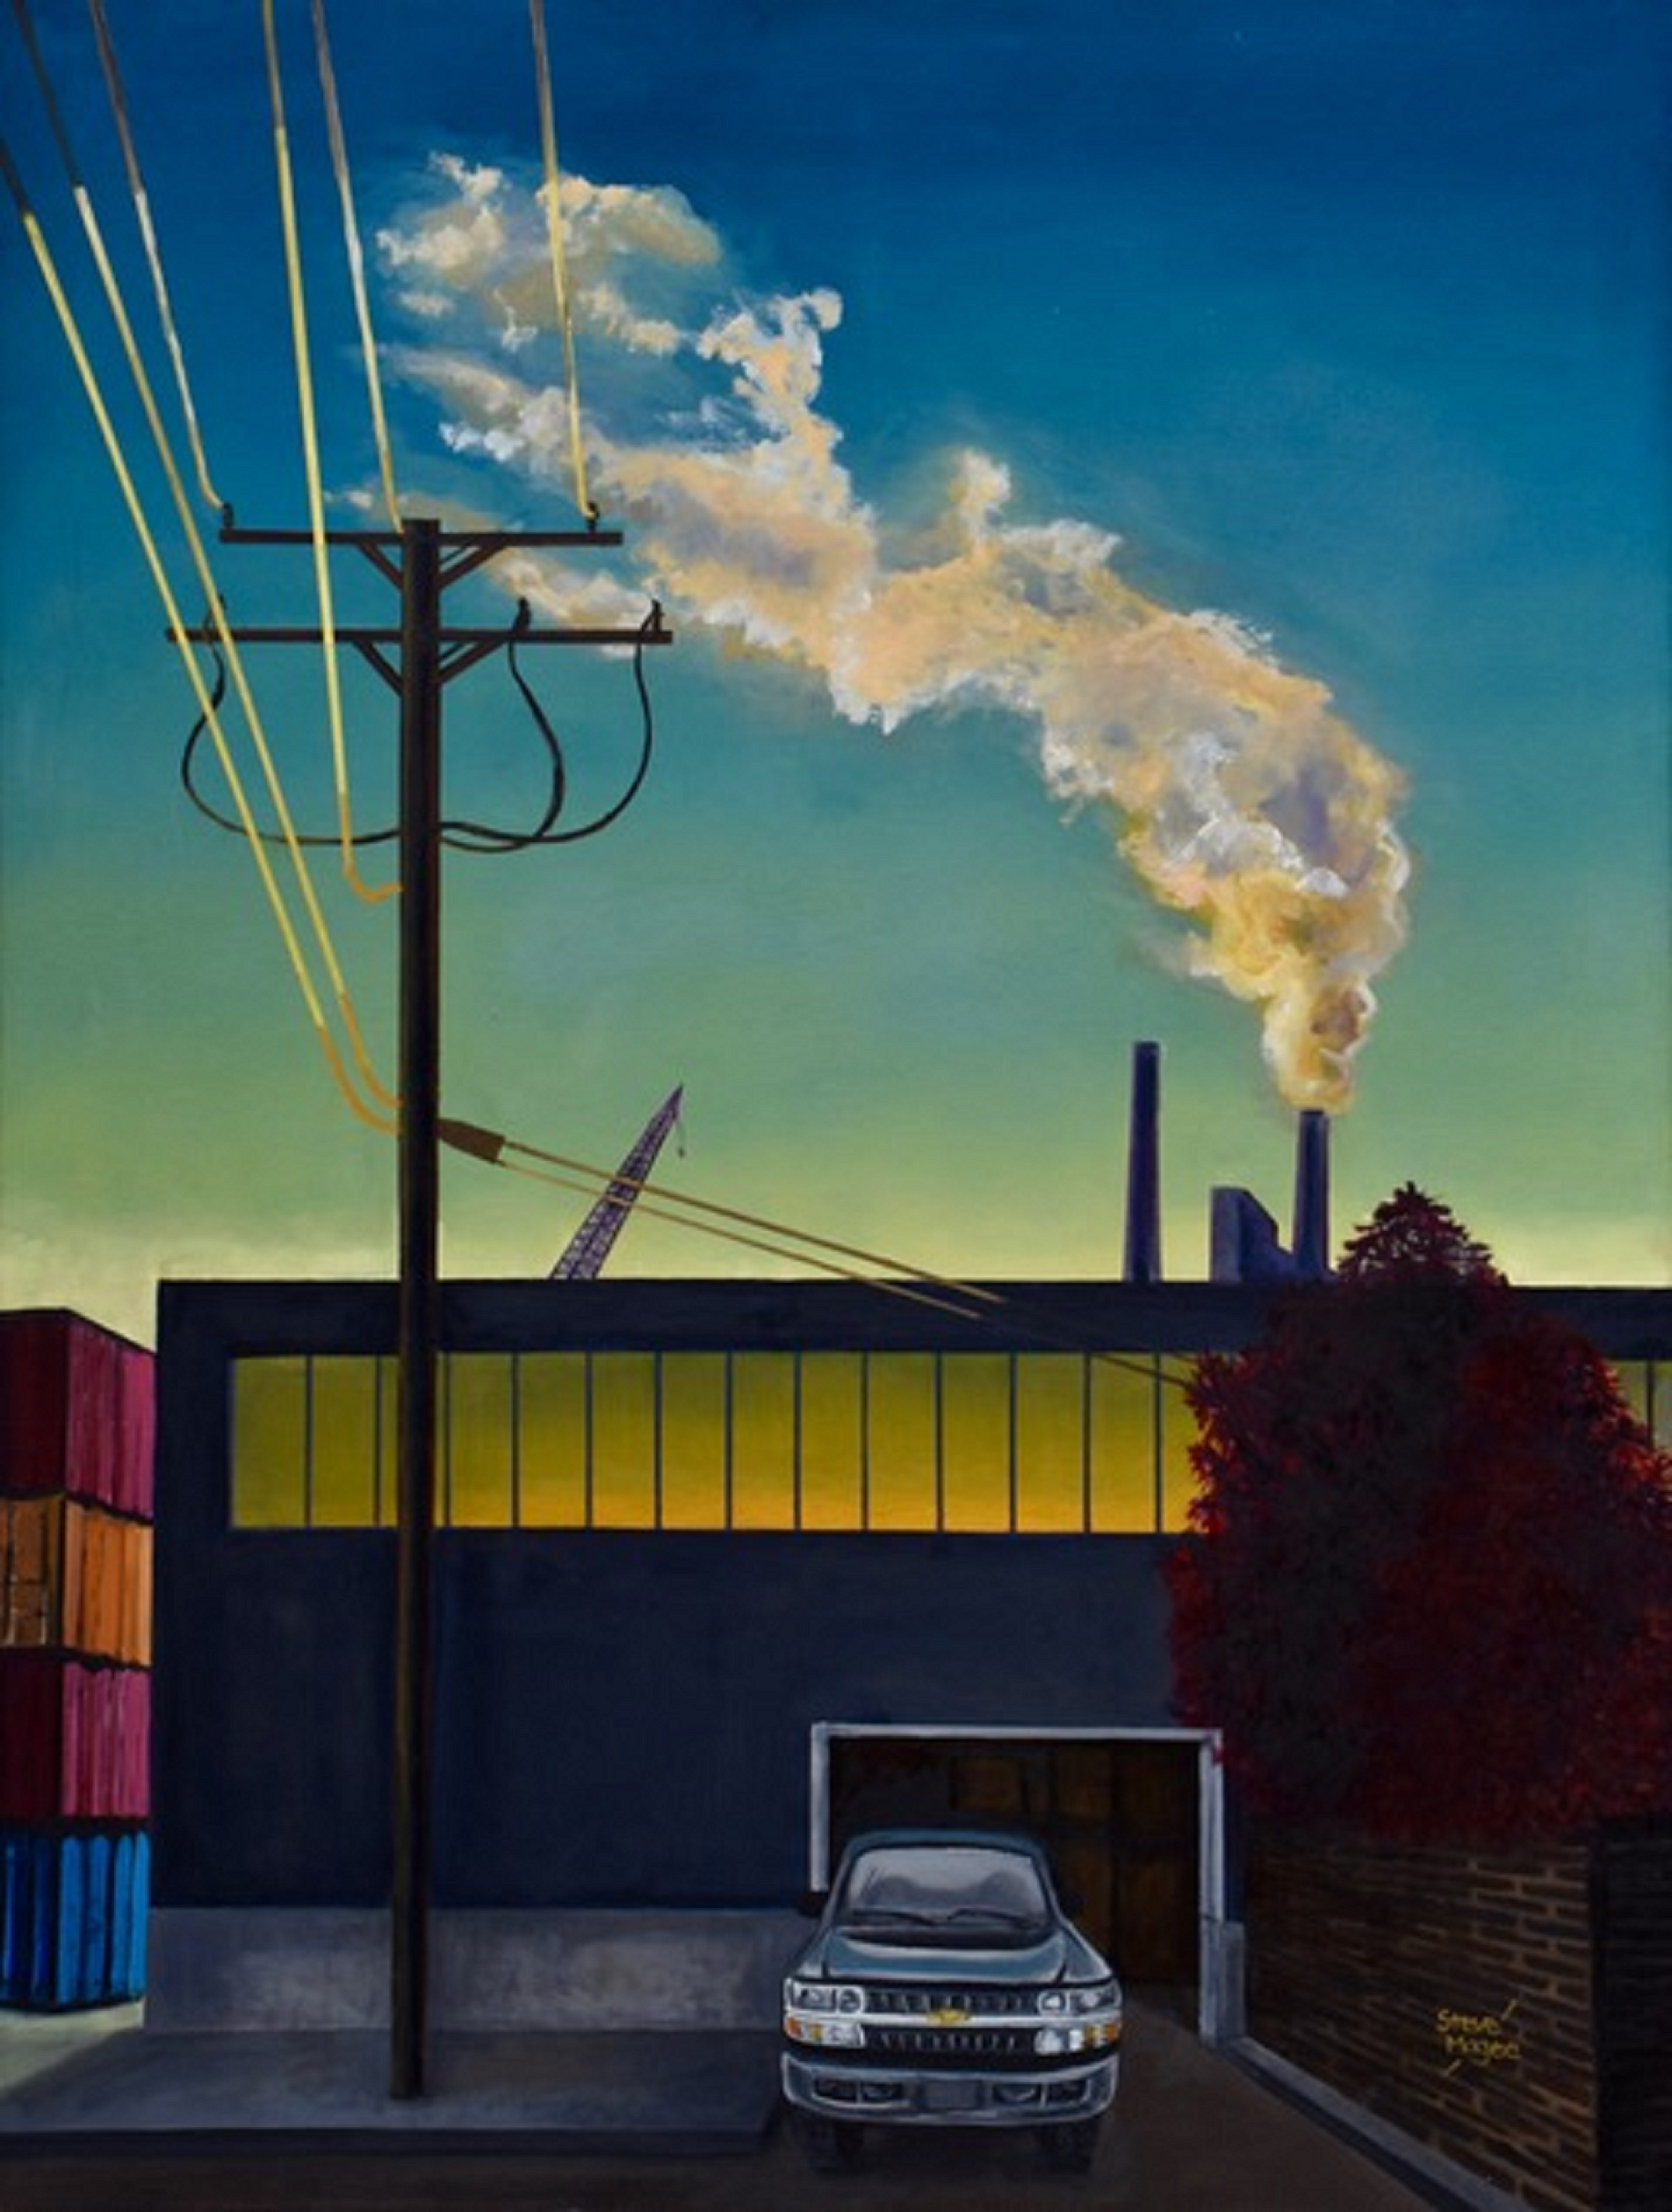 "Bridgeport Warehouse" by Steve Magee